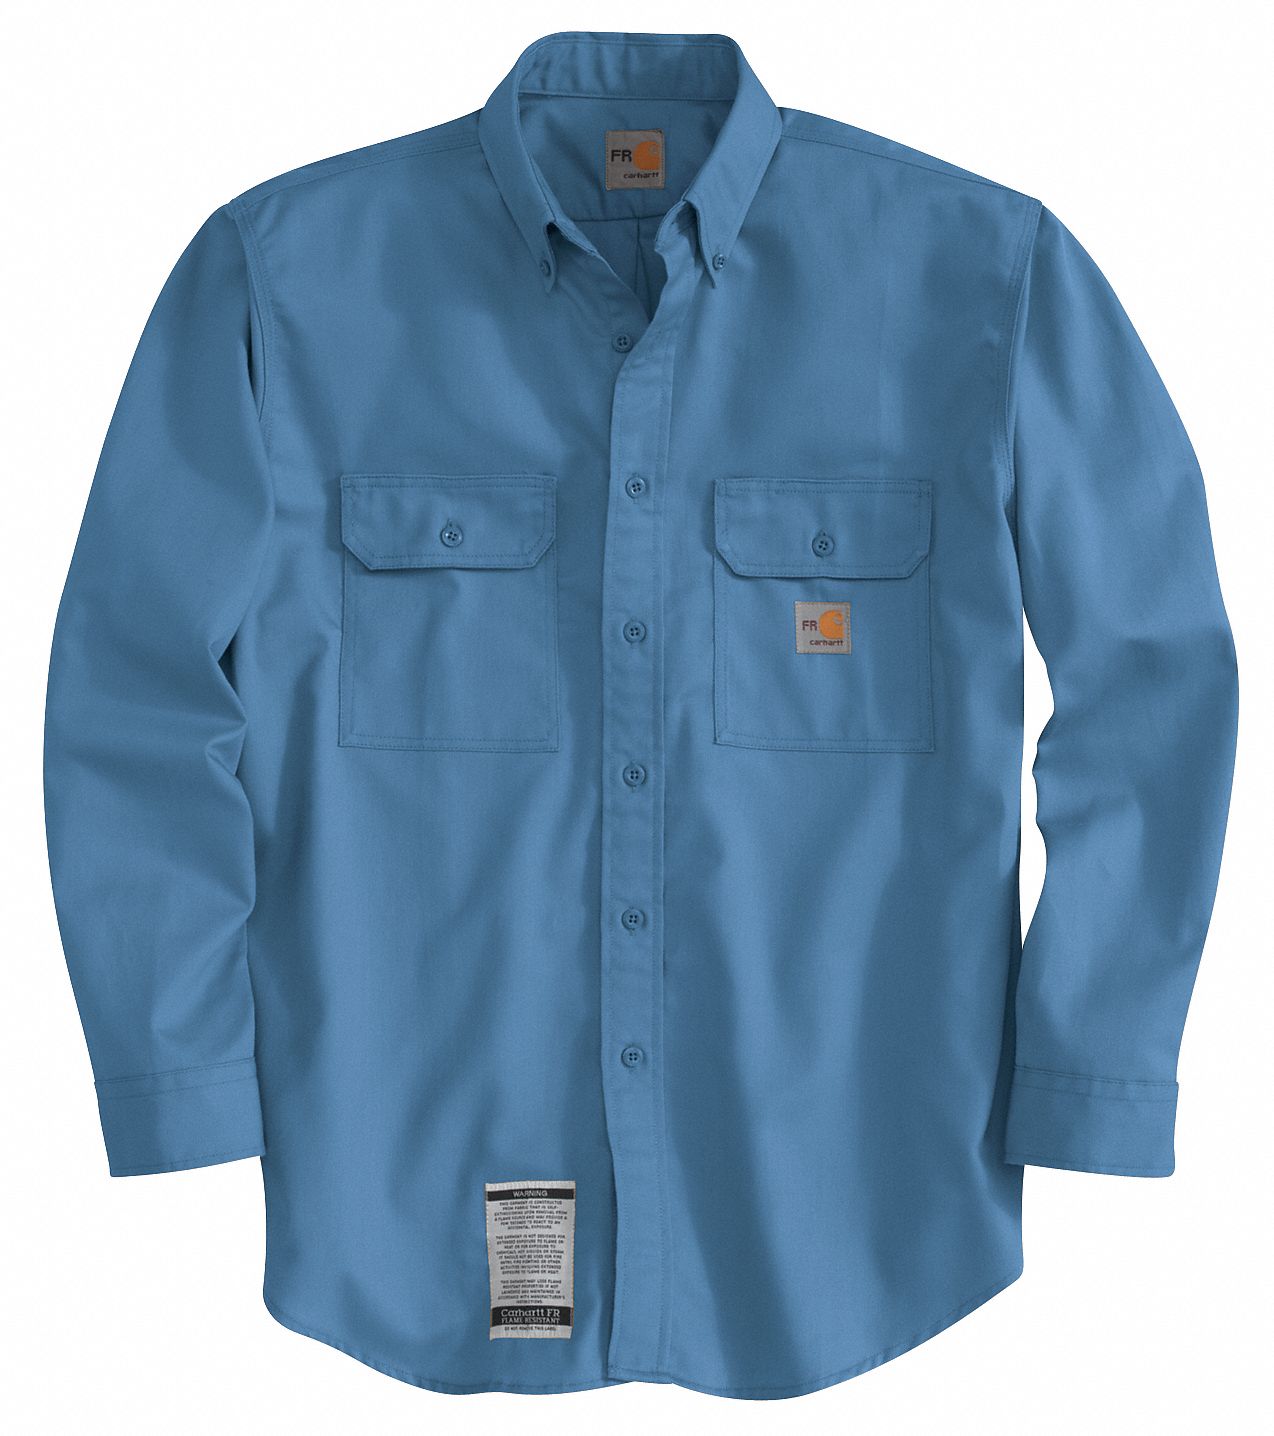 CARHARTT, 8.6 cal/sq cm ATPV, Men's, Flame-Resistant Collared Shirt ...